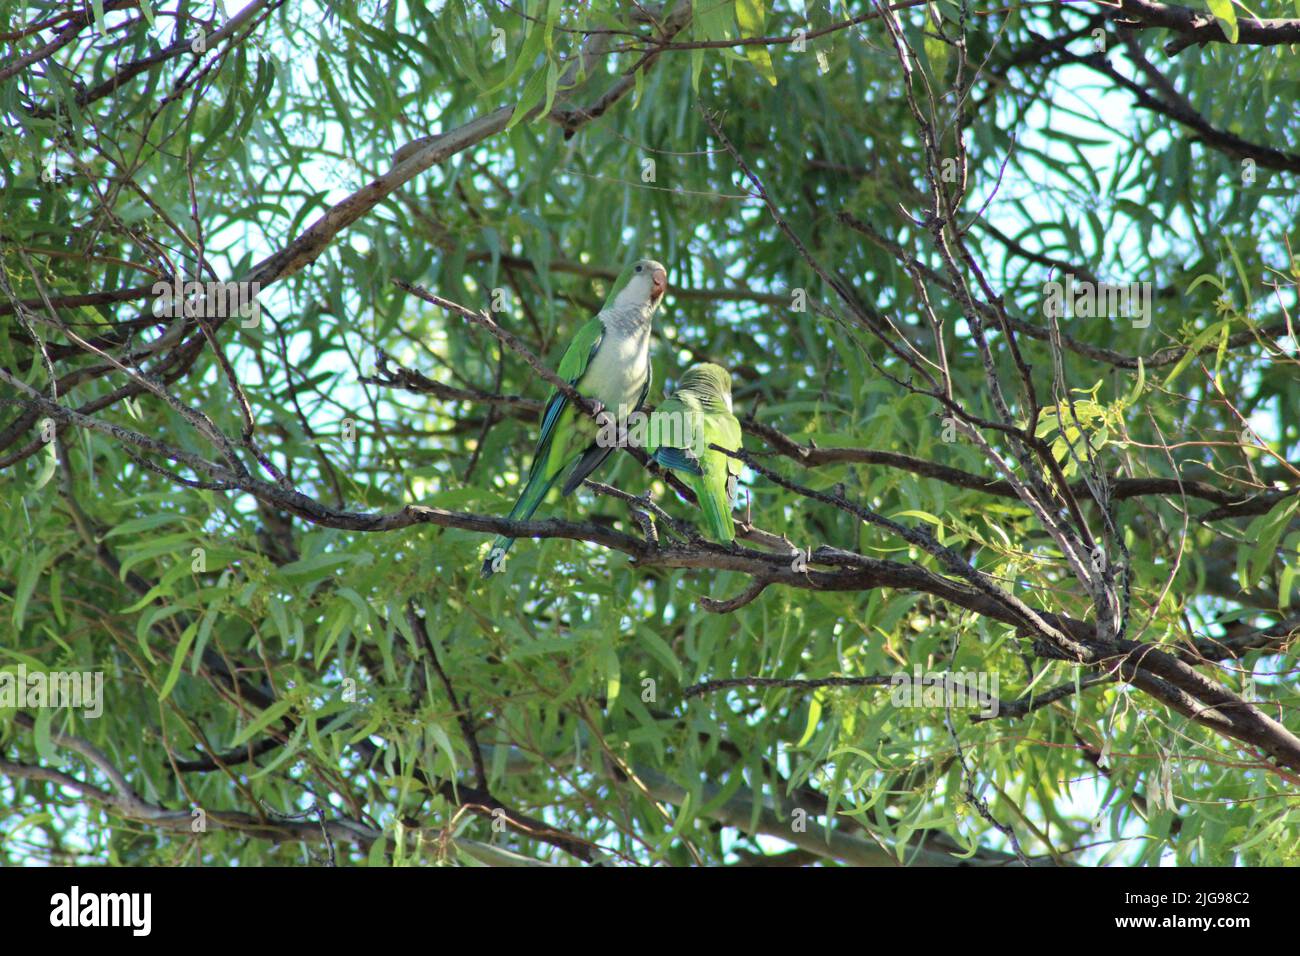 Parrots on tree branch, talking Stock Photo